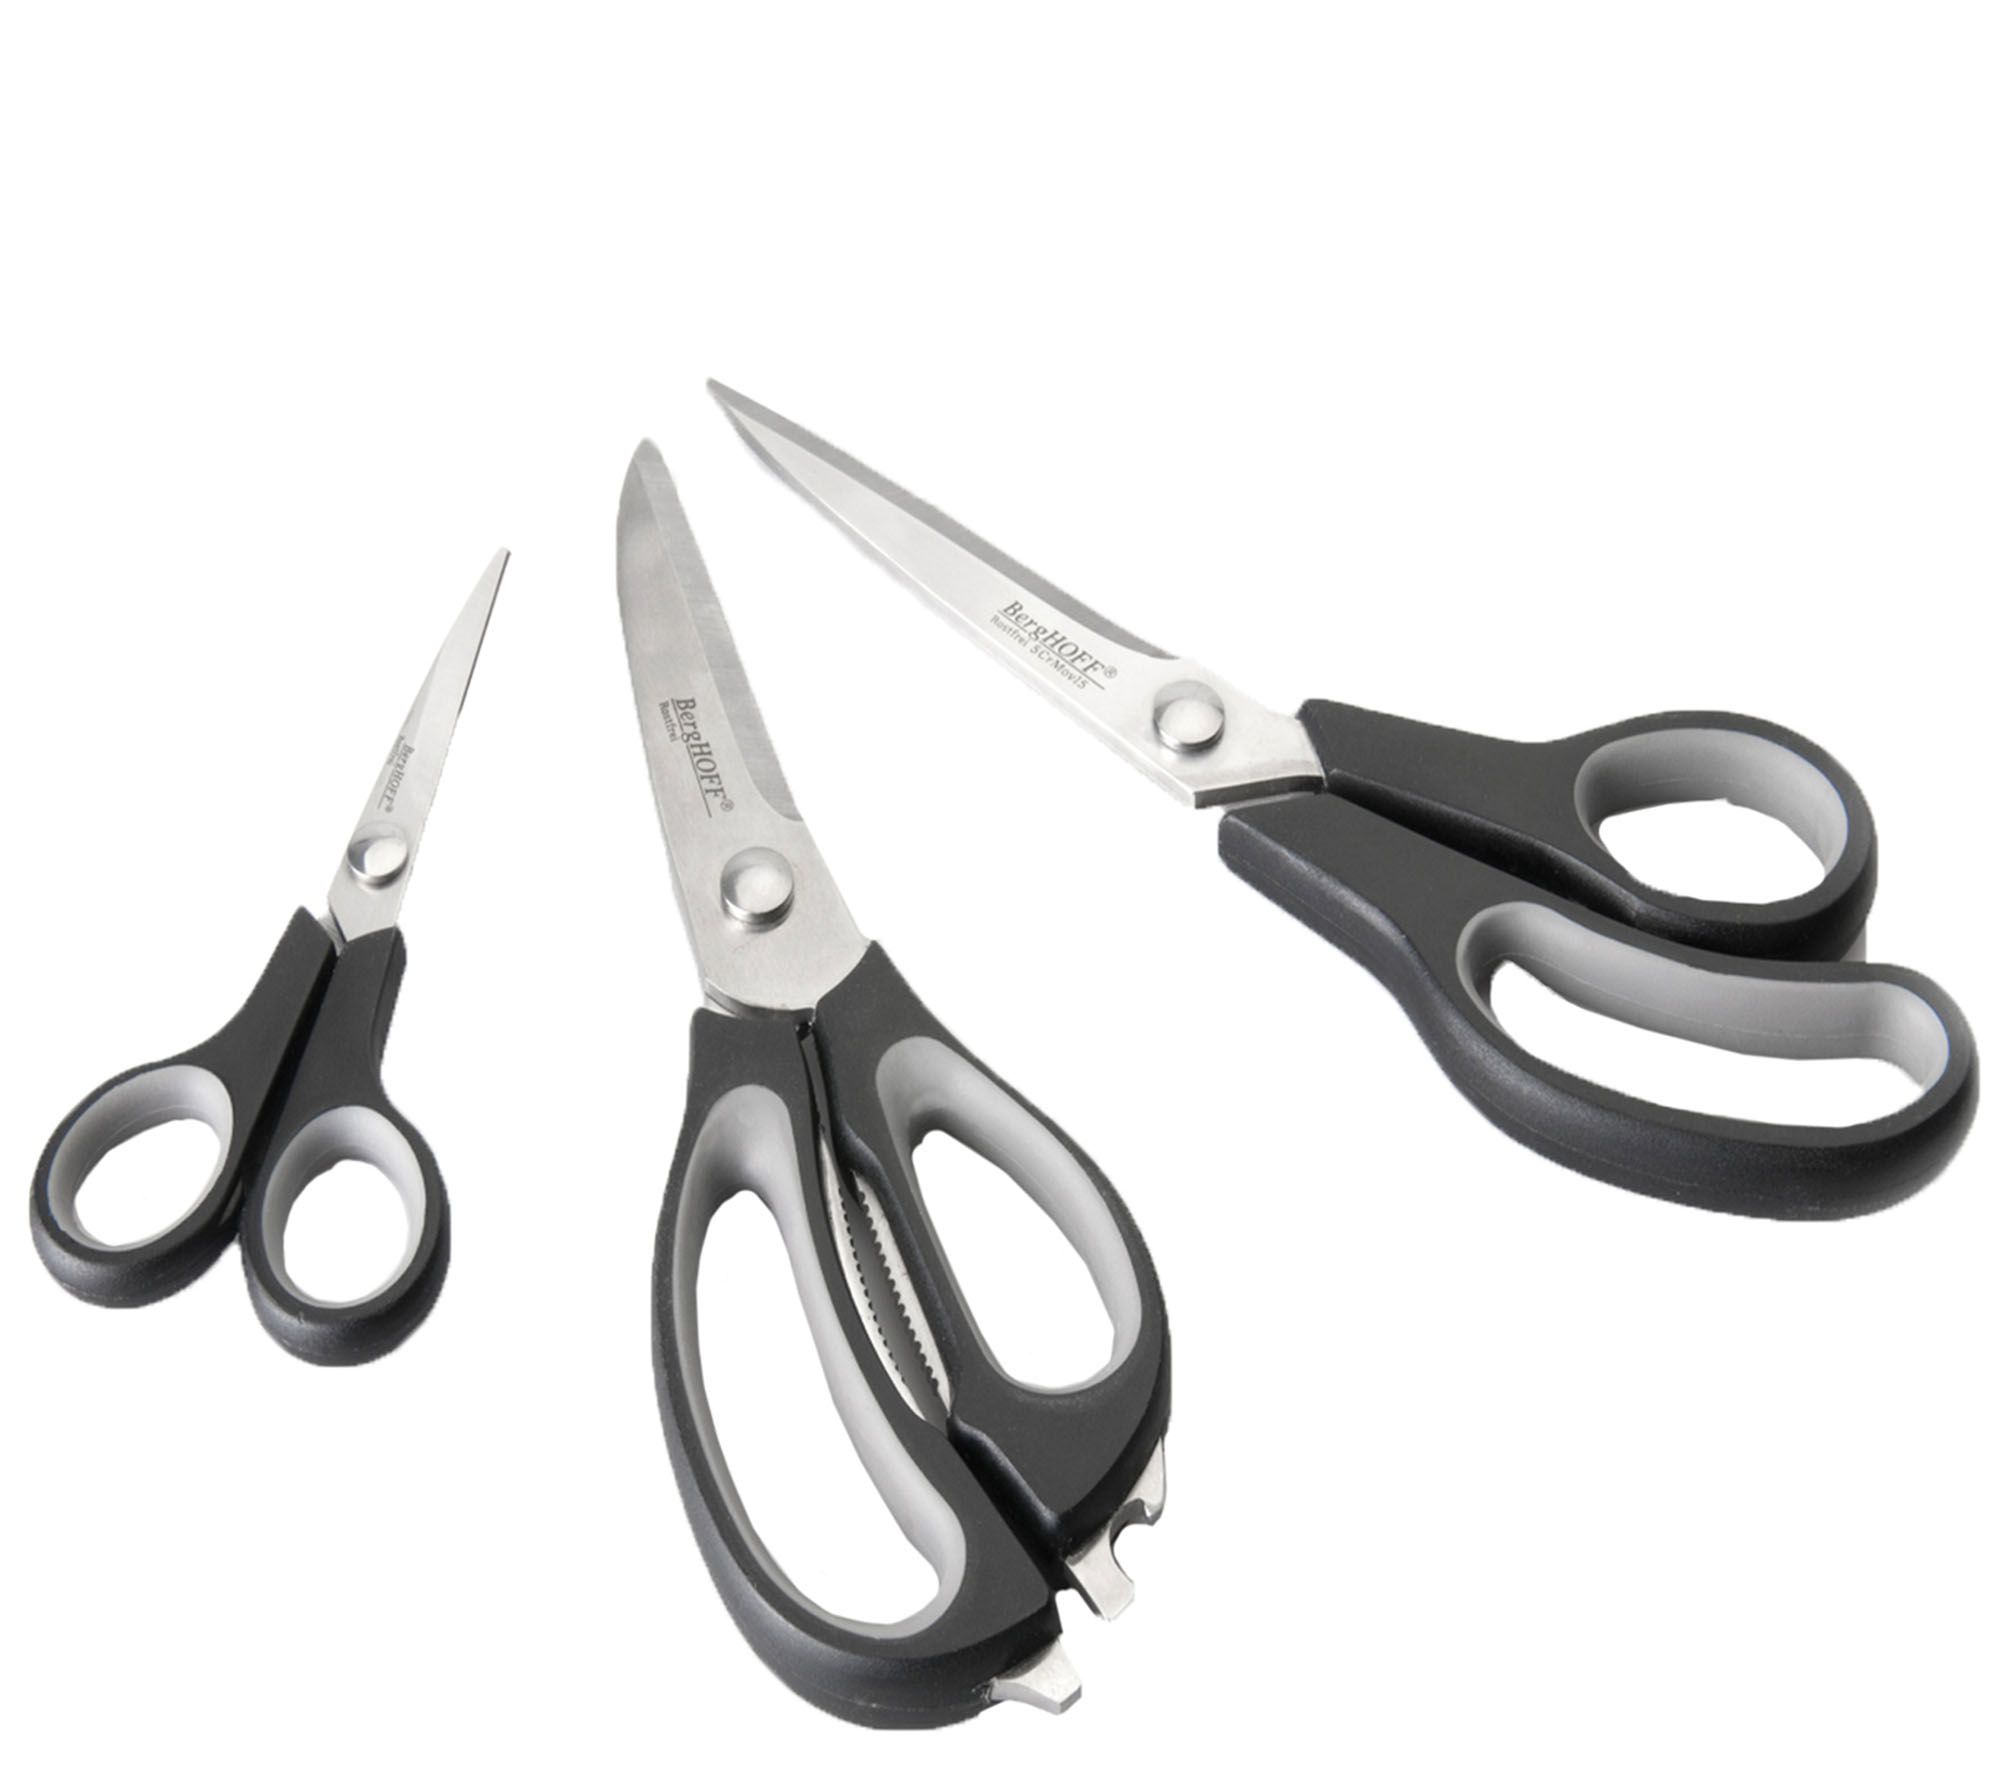 BergHOFF CooknCo Scissors Set, 3 Piece - Black